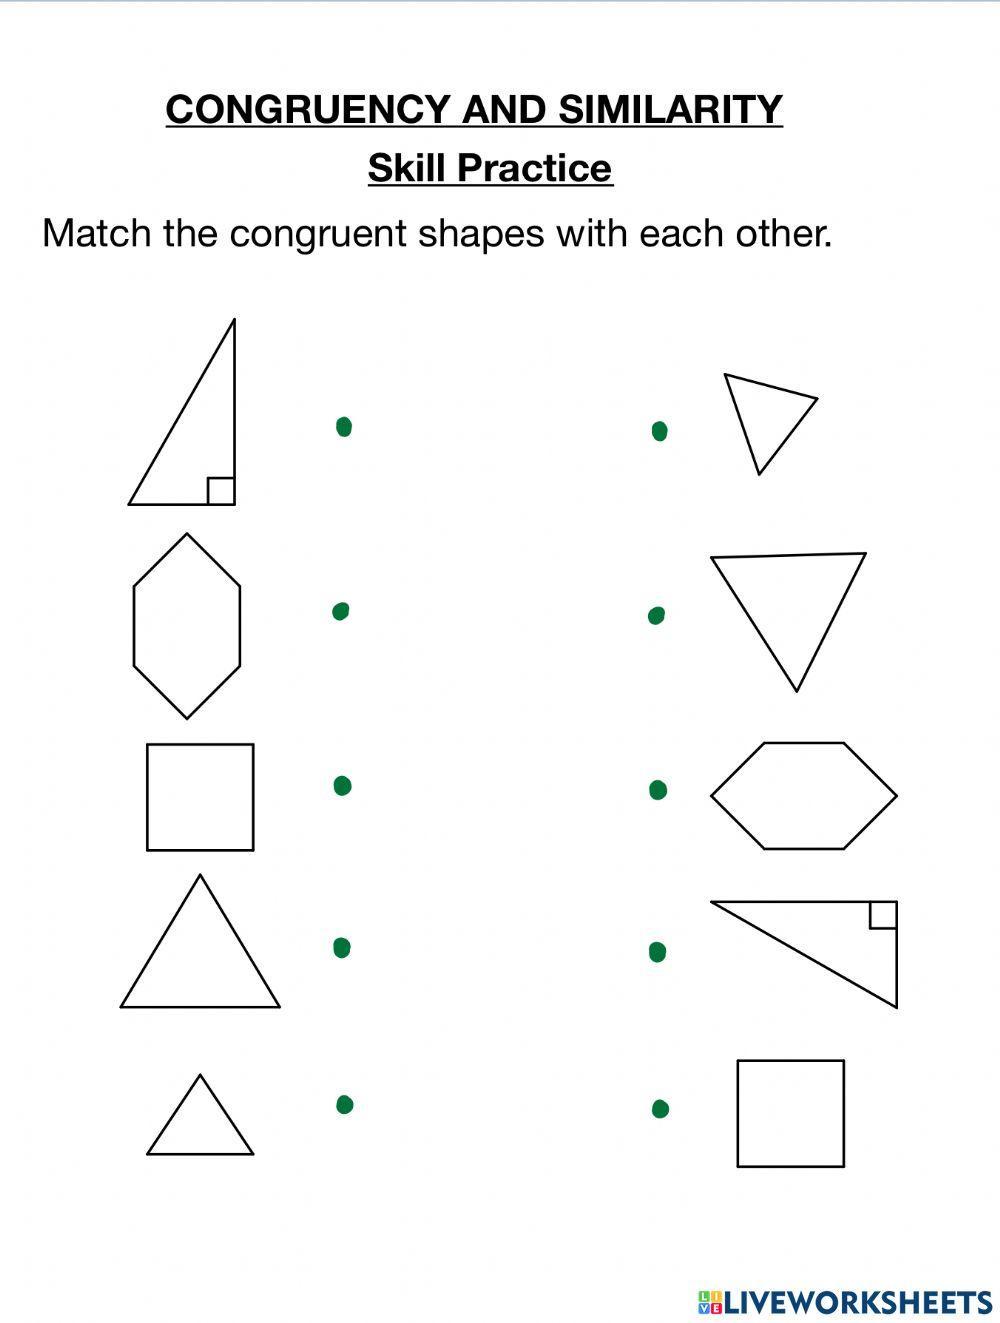 Congruent shapes